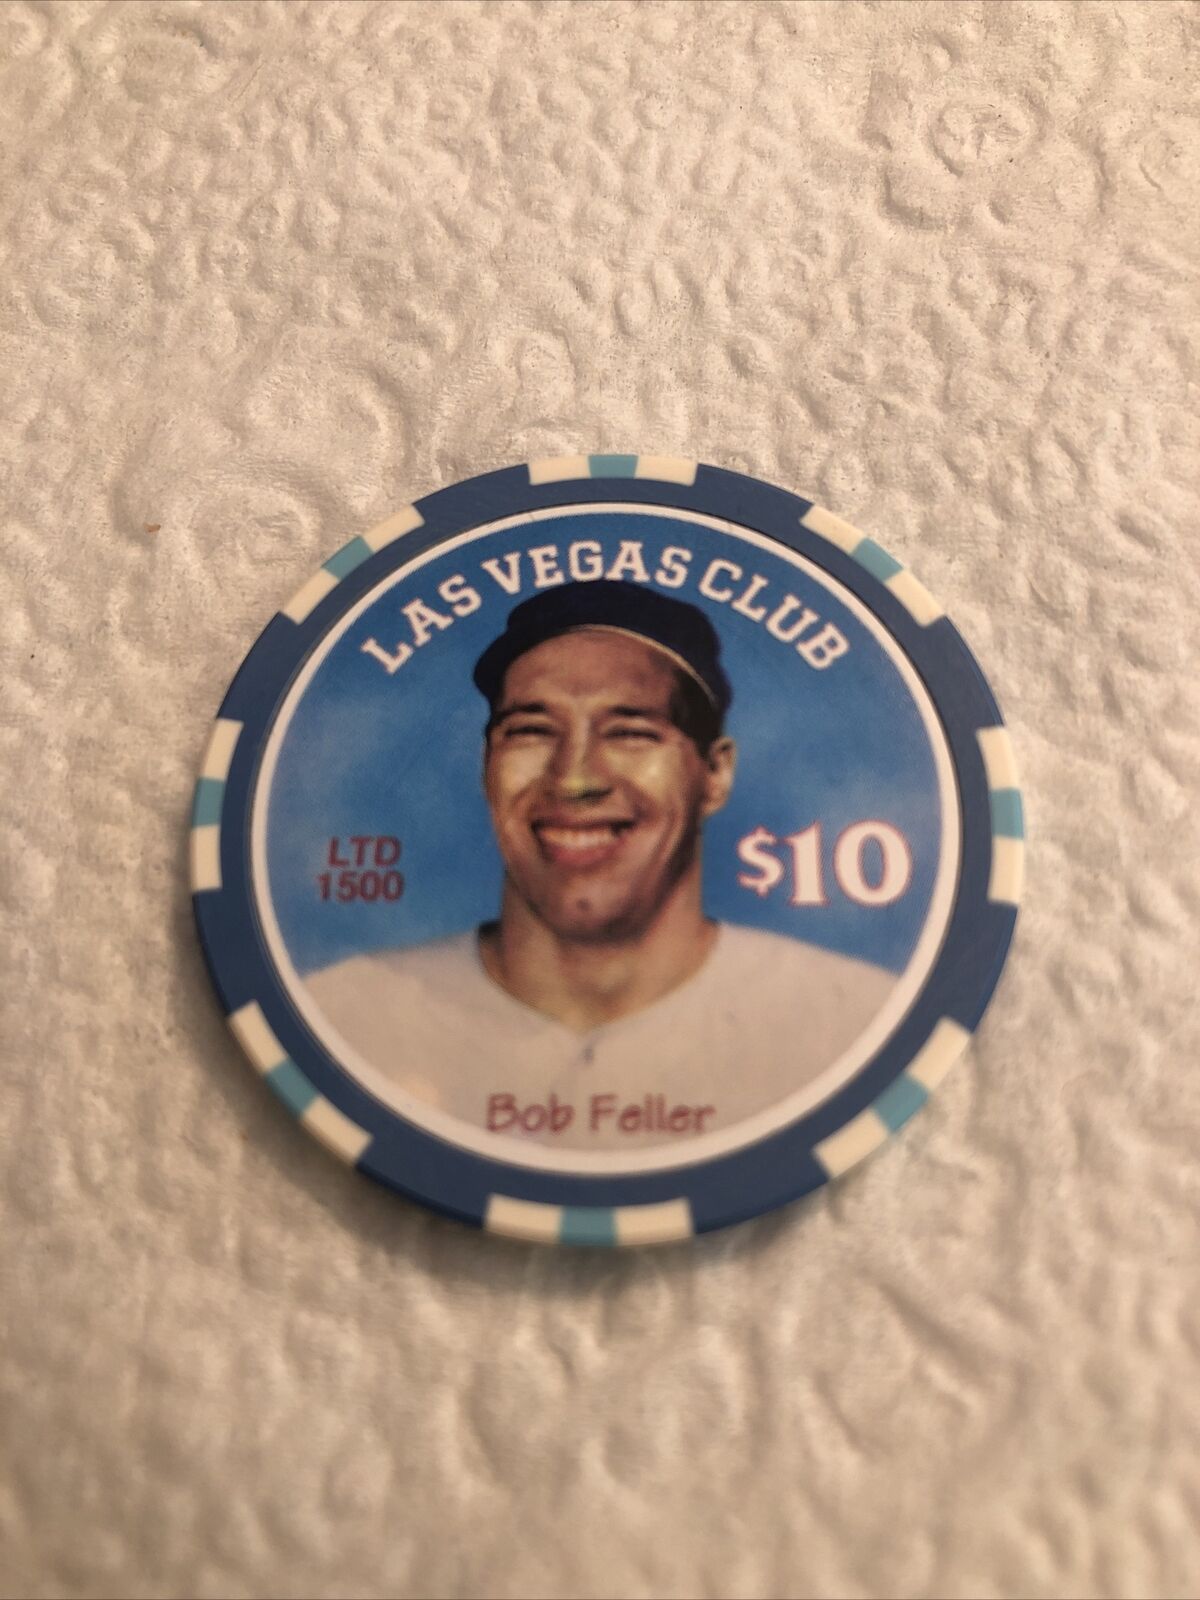 $10 Las Vegas Club Bob Feller Casino Chip